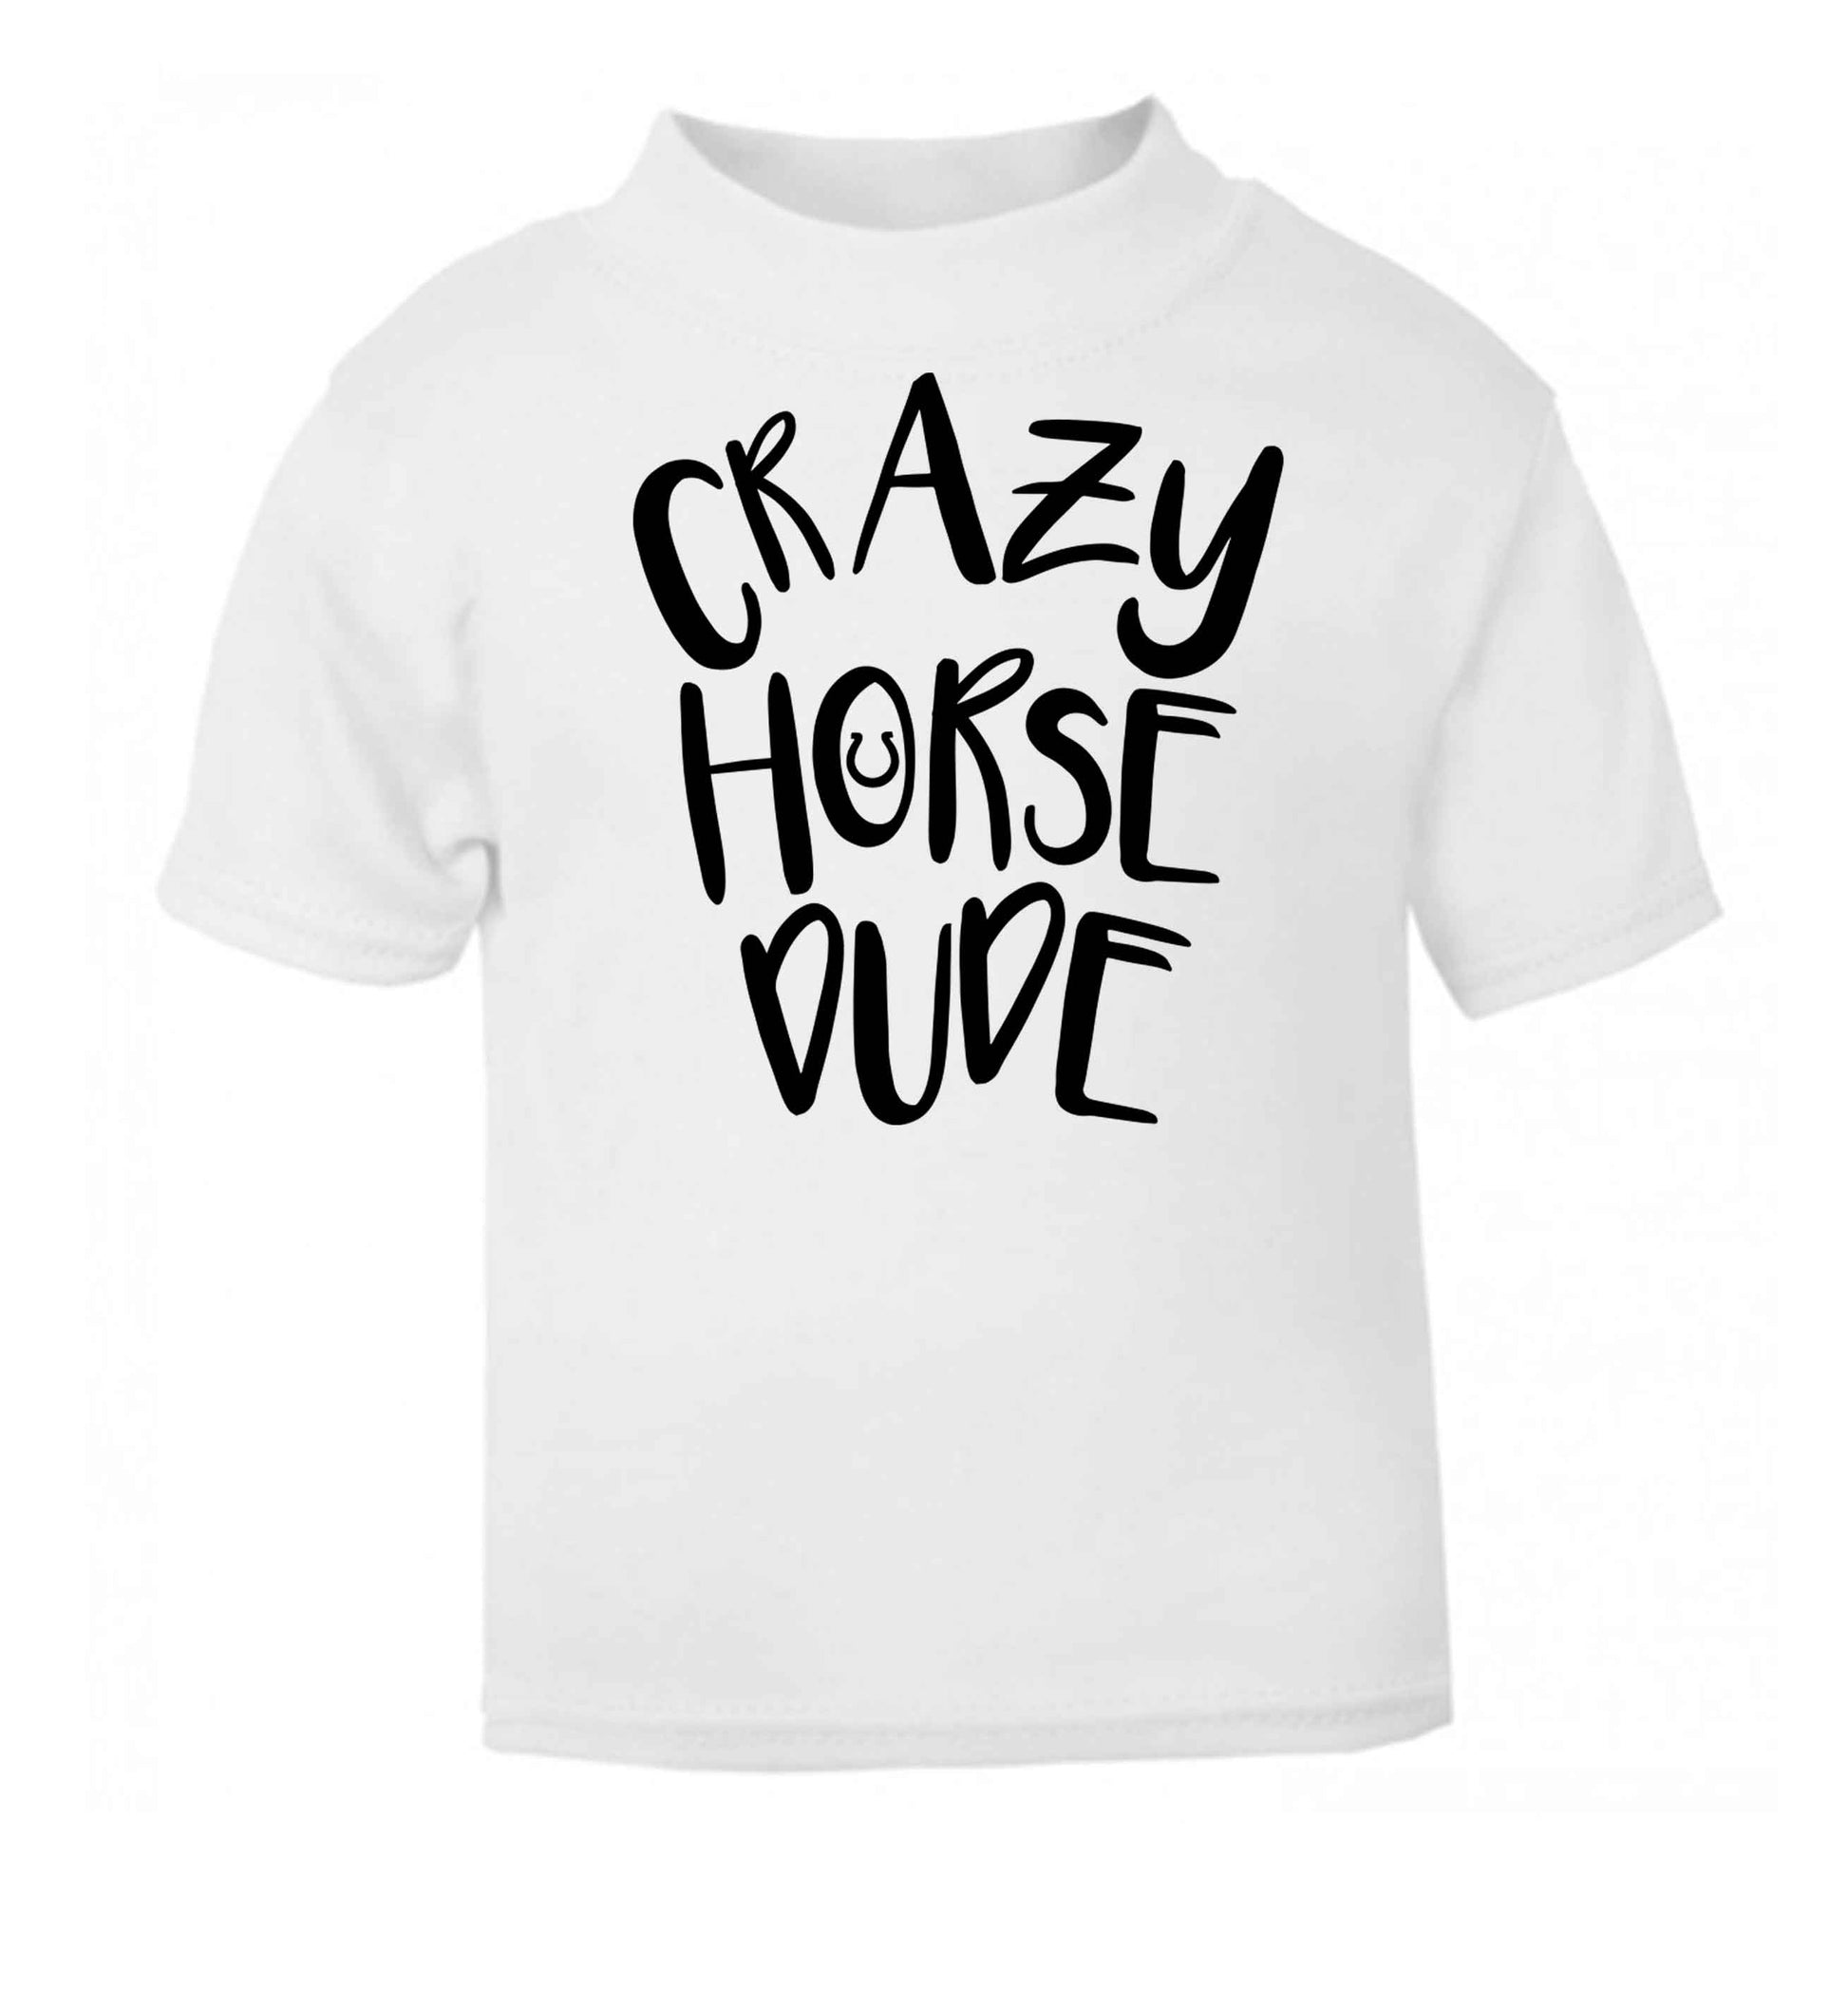 Crazy horse dude white baby toddler Tshirt 2 Years